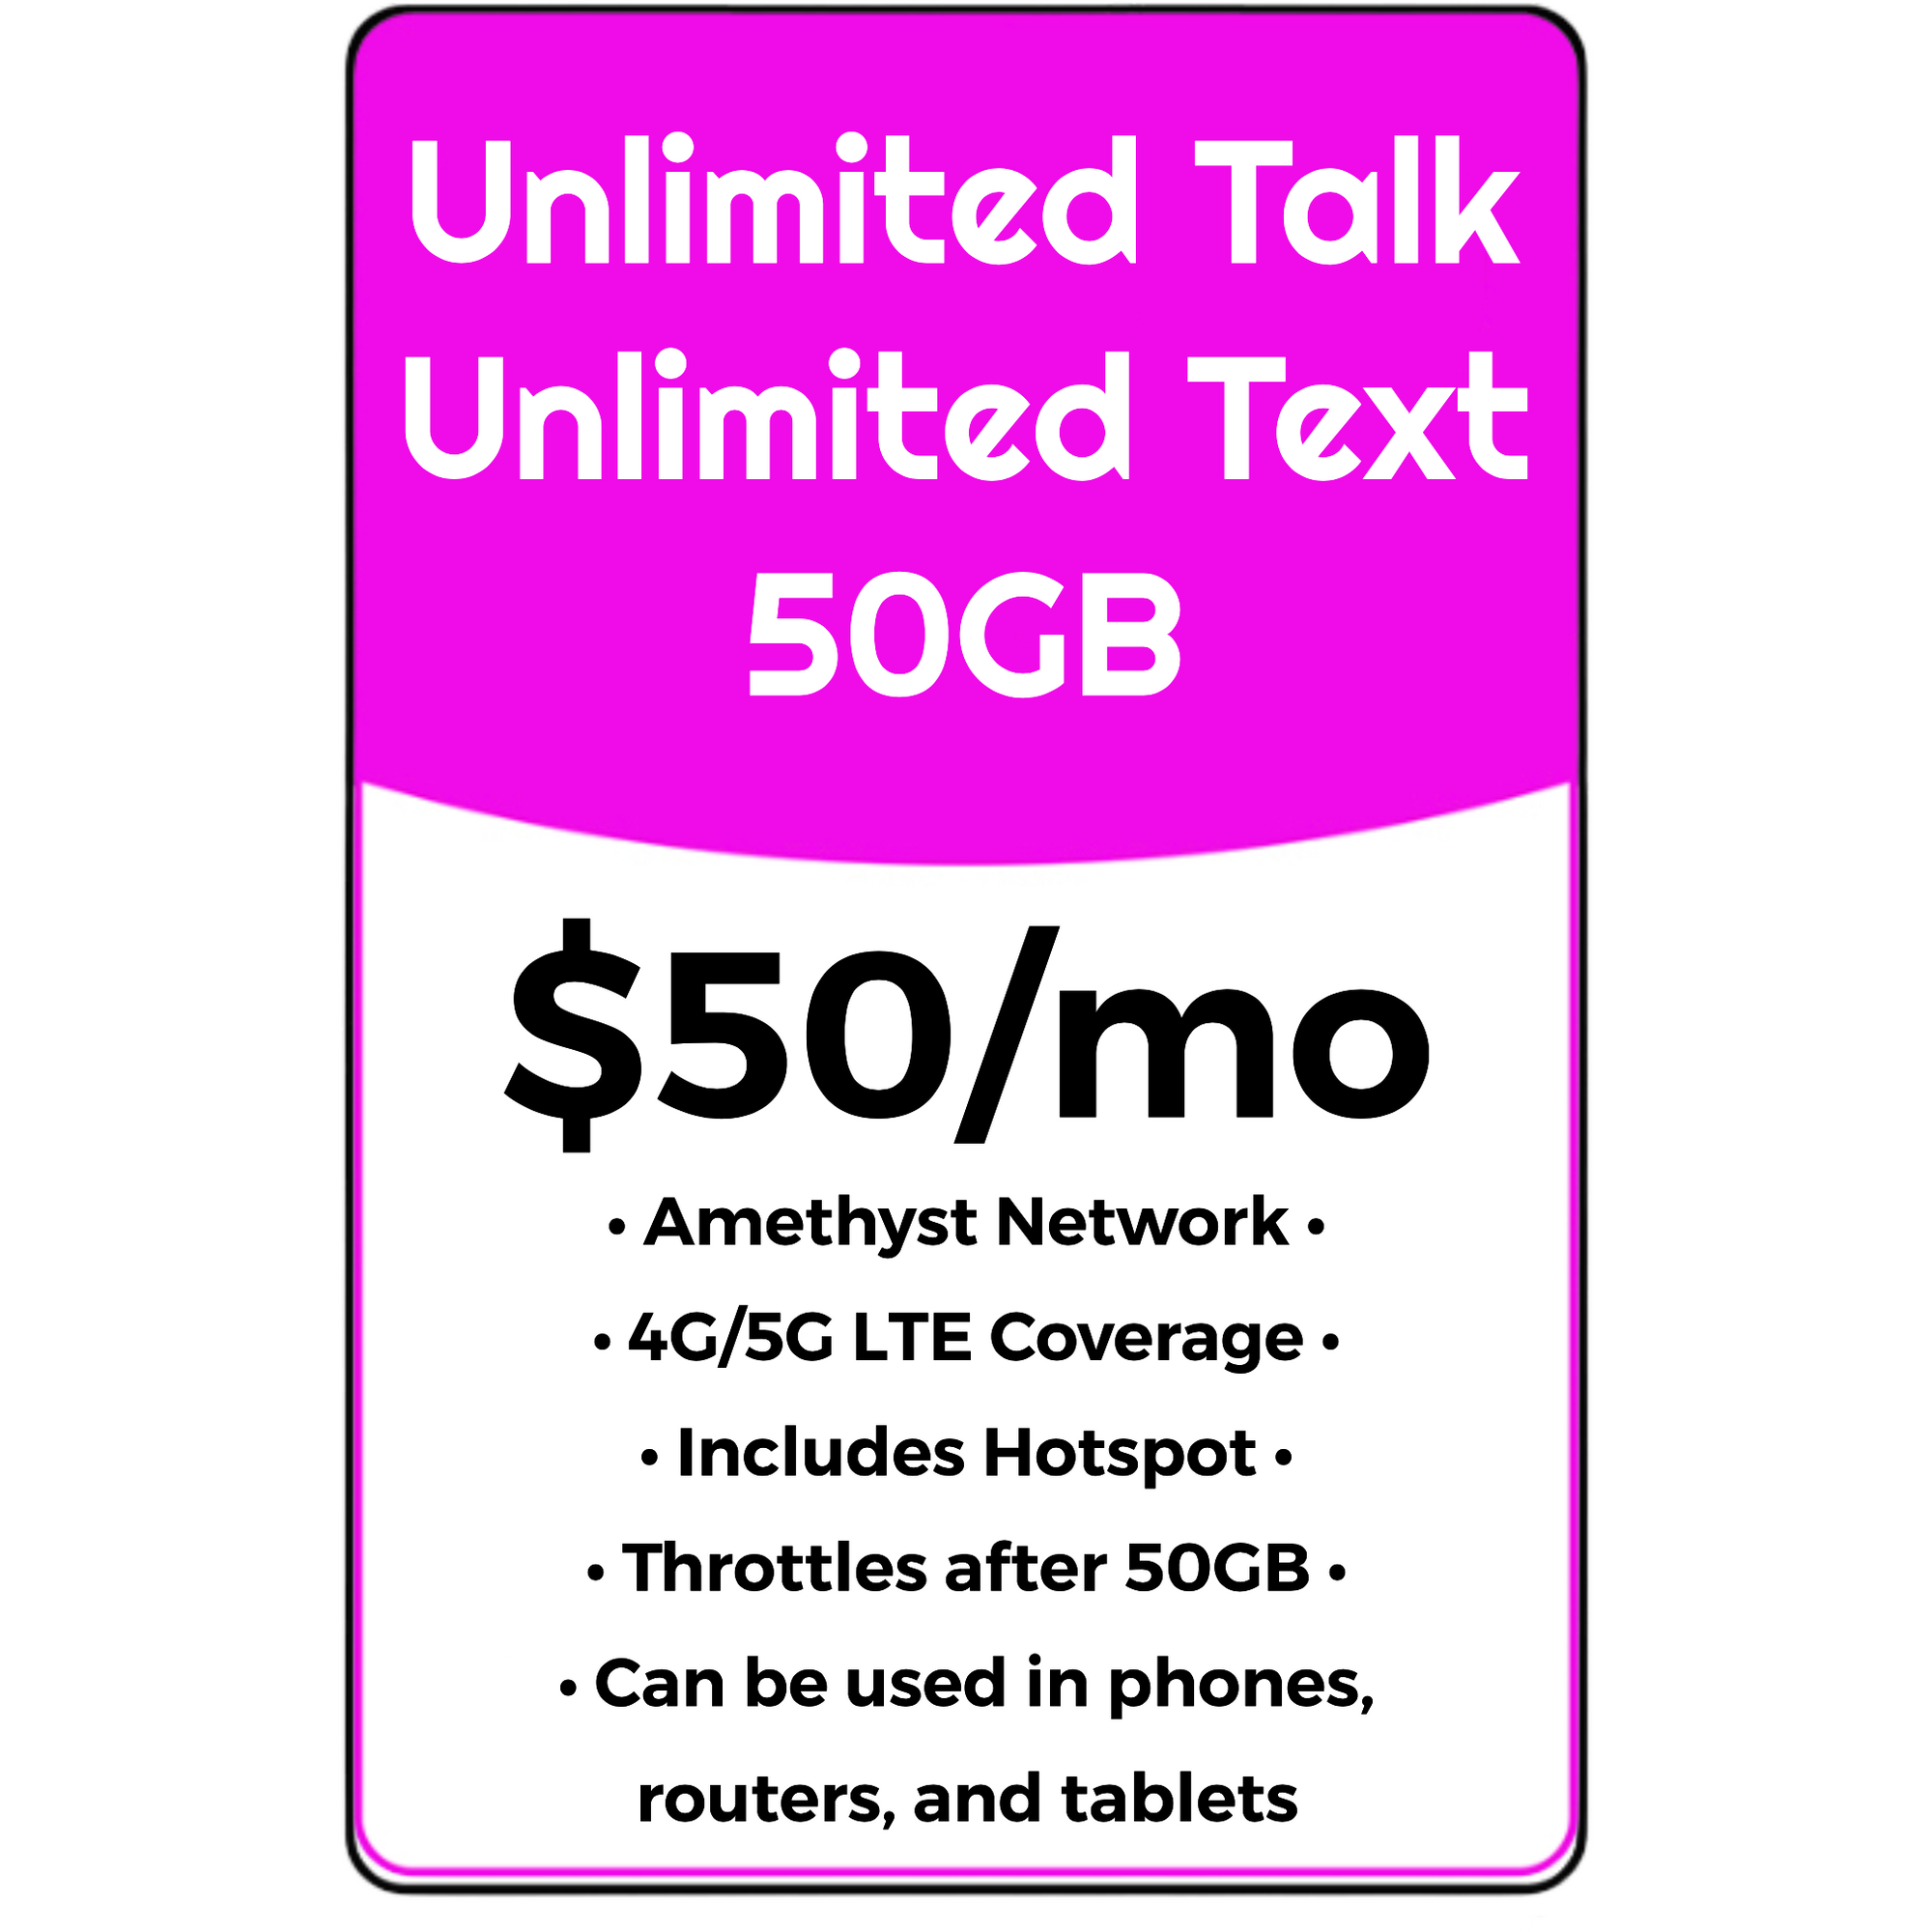 UNL TALK, TEXT & DATA W/50GB HIGH SPEED - (Phone or Data Device) - AMETHYST NETWORK